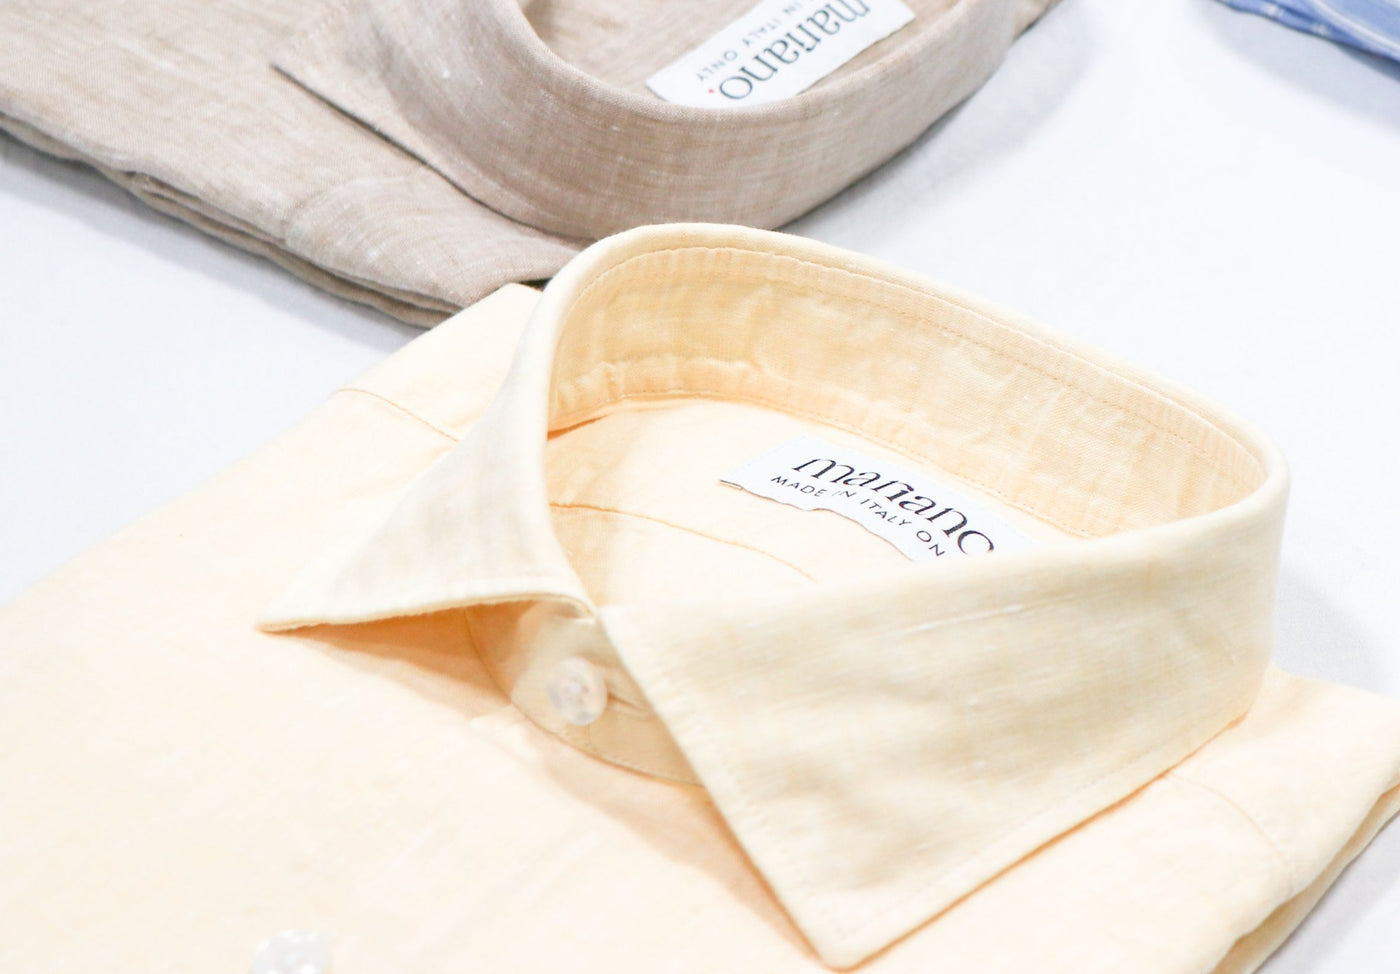 Mariano Linen Shirts